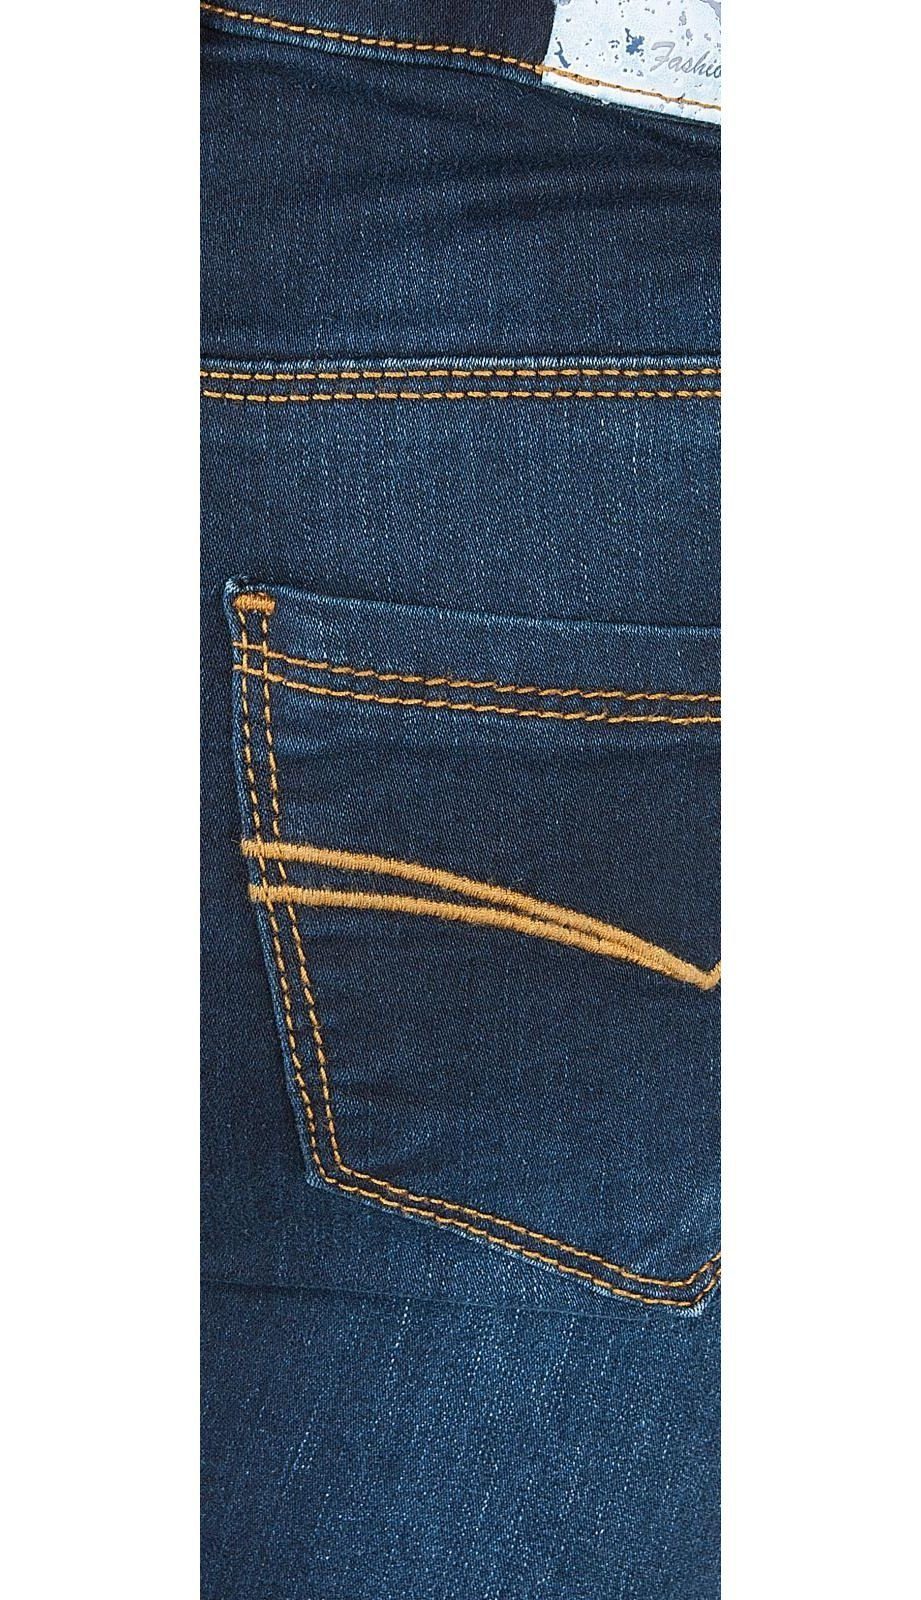 BLUE fit Plus-Größe big Hose ultra stretch Comfort-fit-Jeans EFFECT Jeans